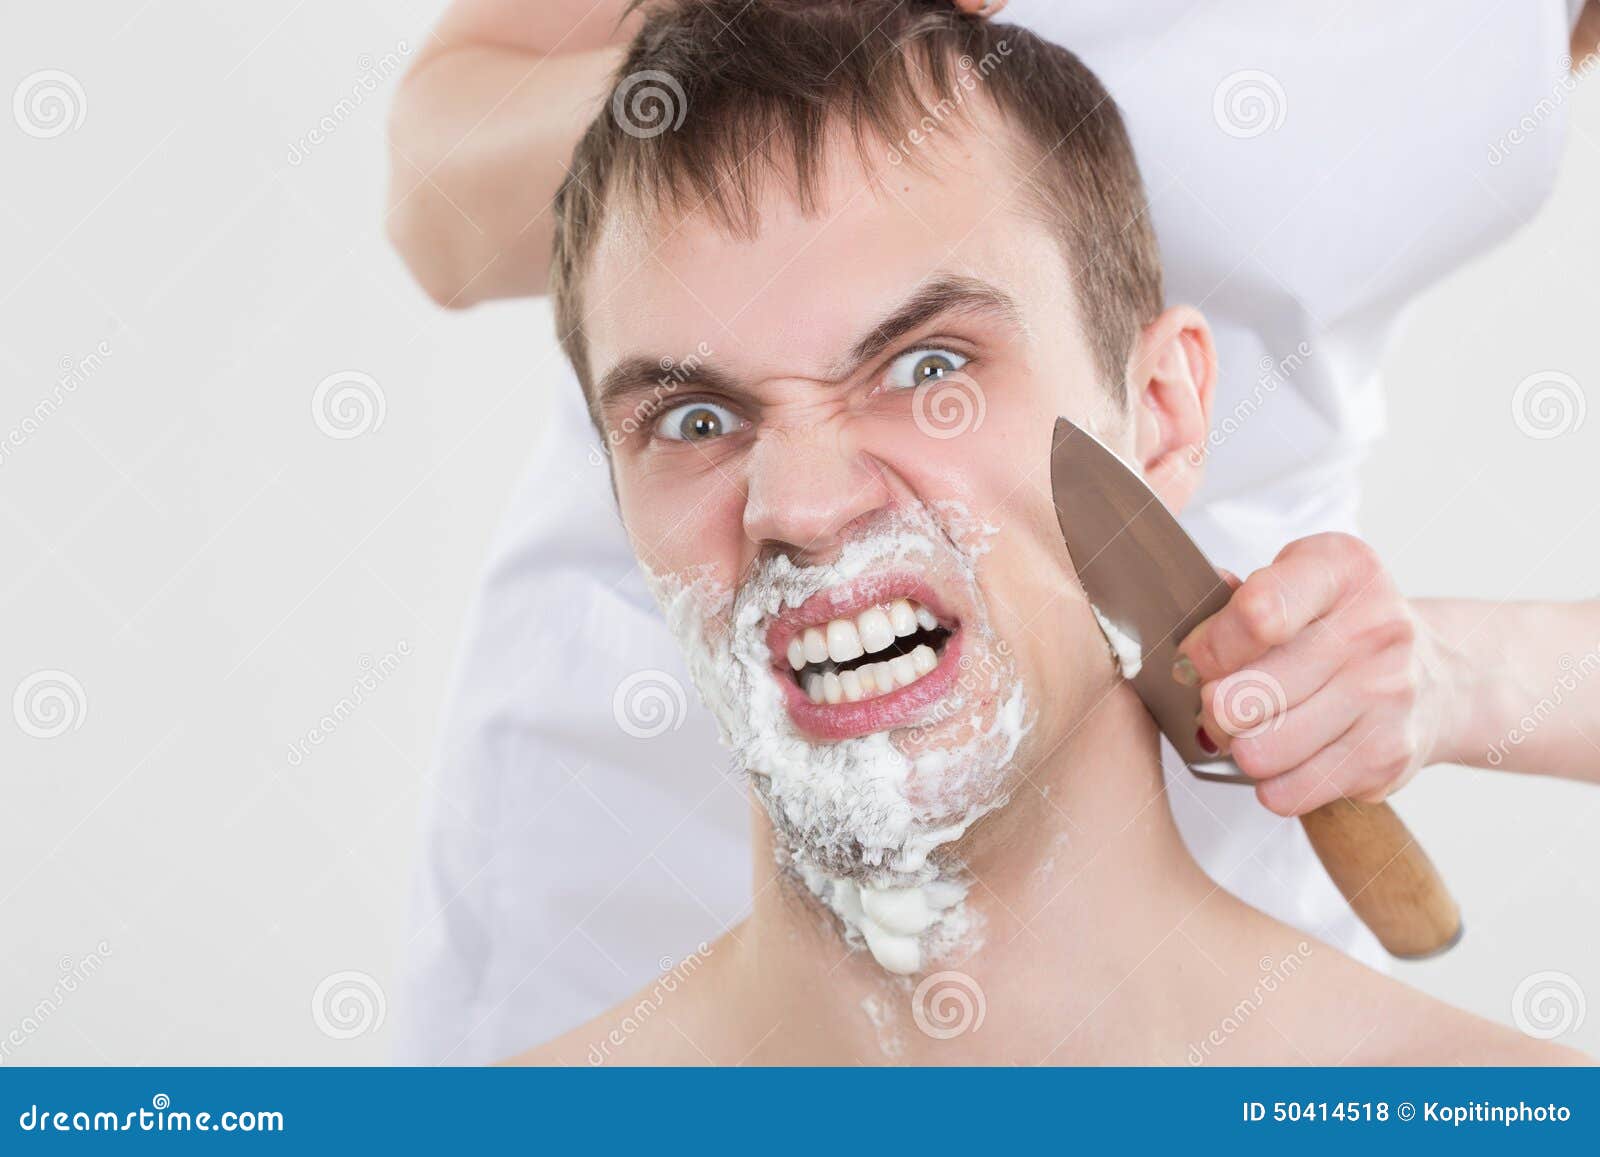 Мужчина бреет видео. Мужчина бреется. Нож для бритья.